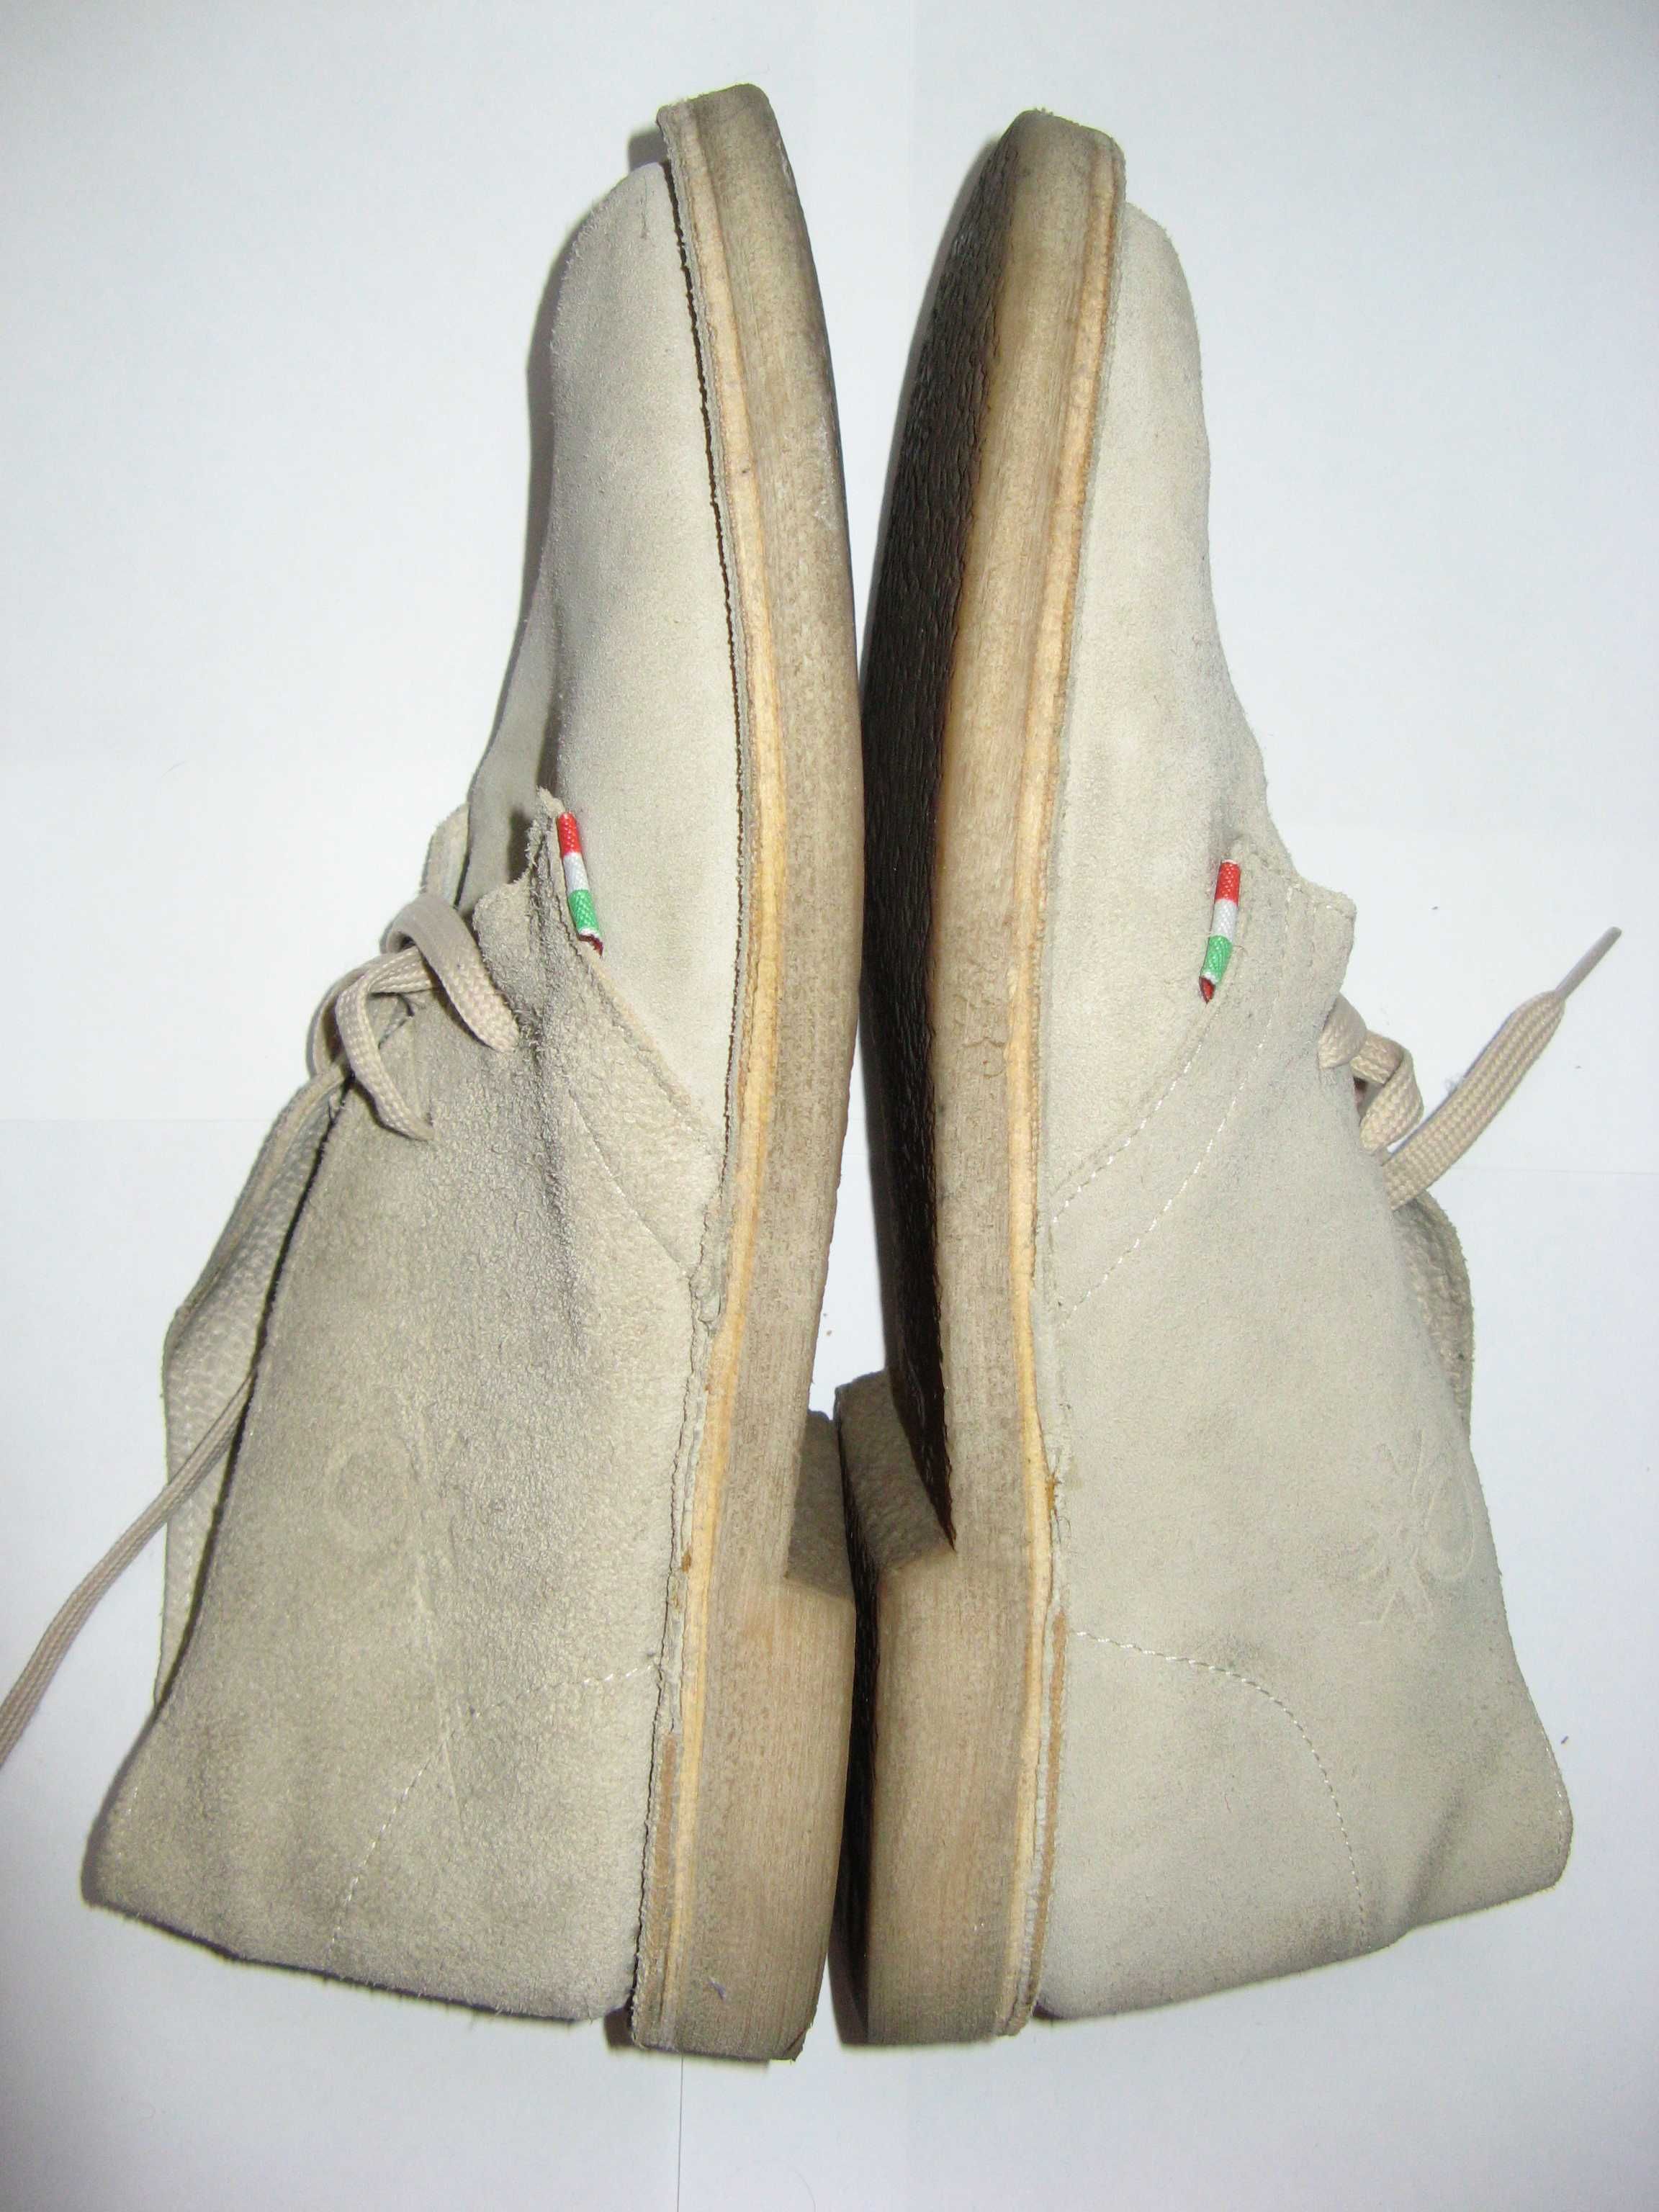 Ботинки (чакка/дезерт) Pelle. Made in Italia. Стелька 26–26,5 см